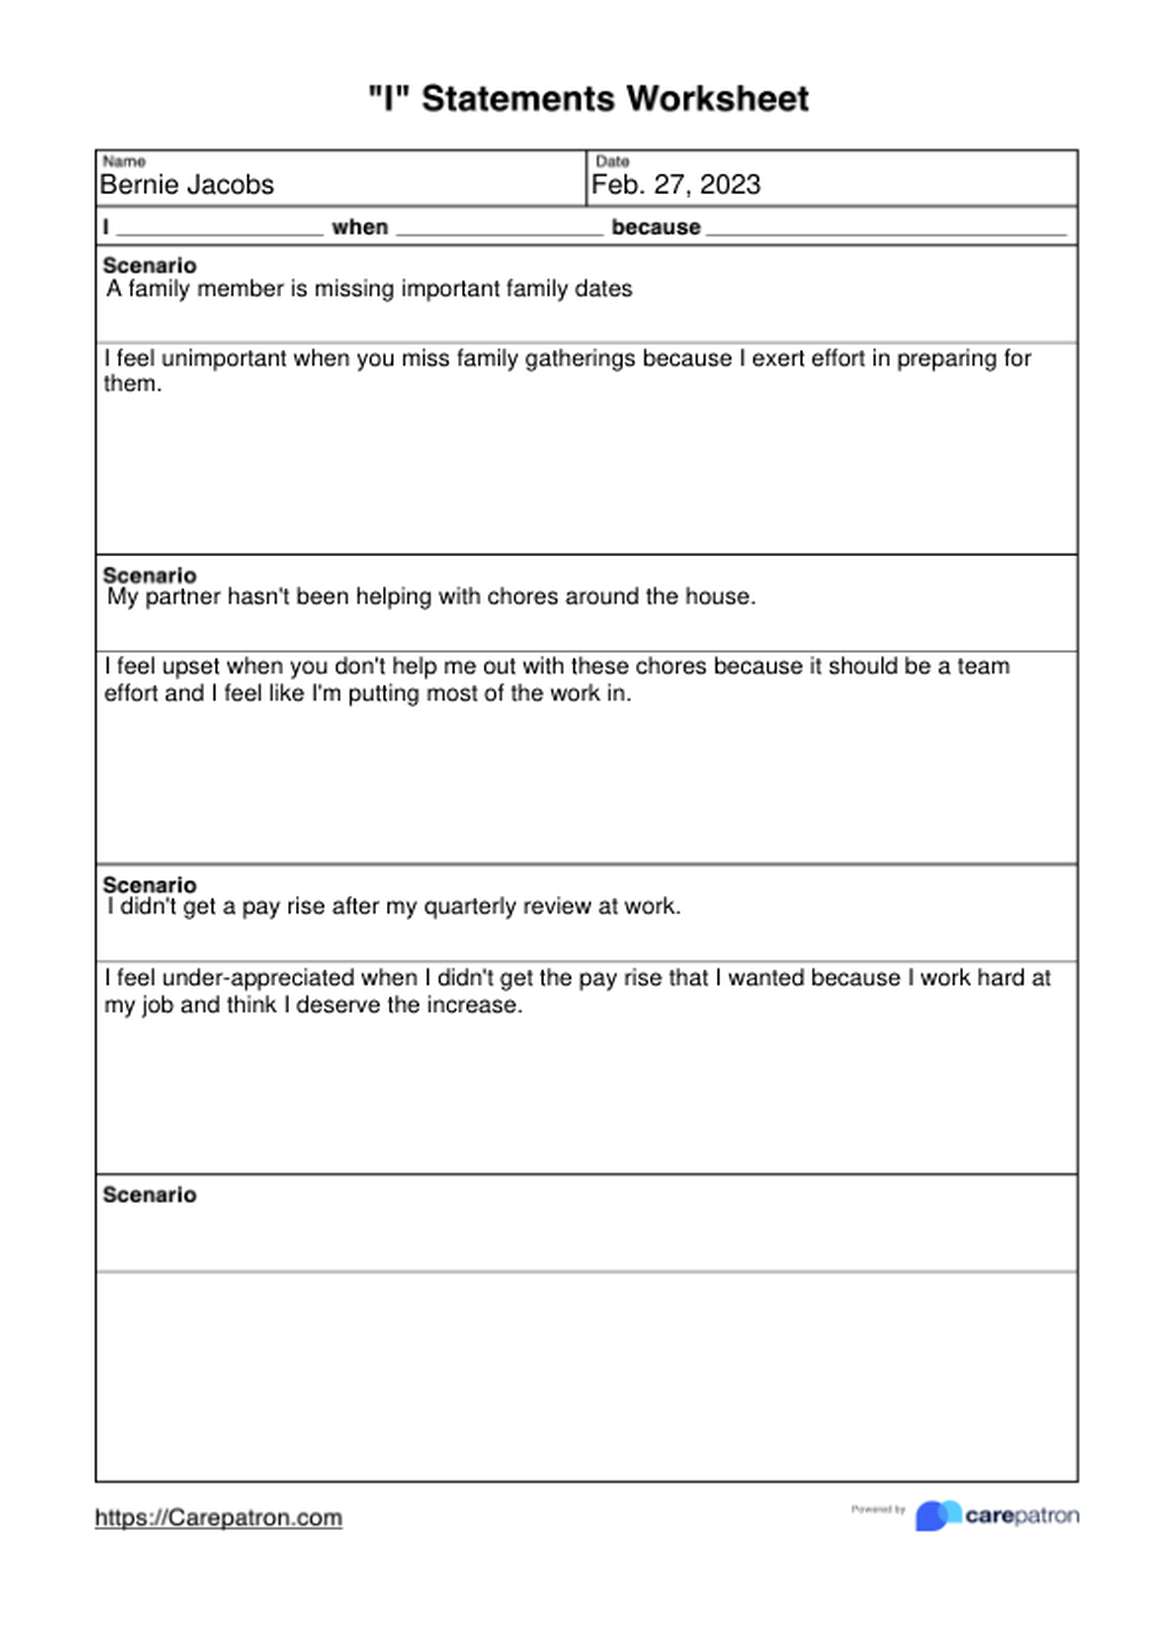 "I" Statements Worksheets PDF Example